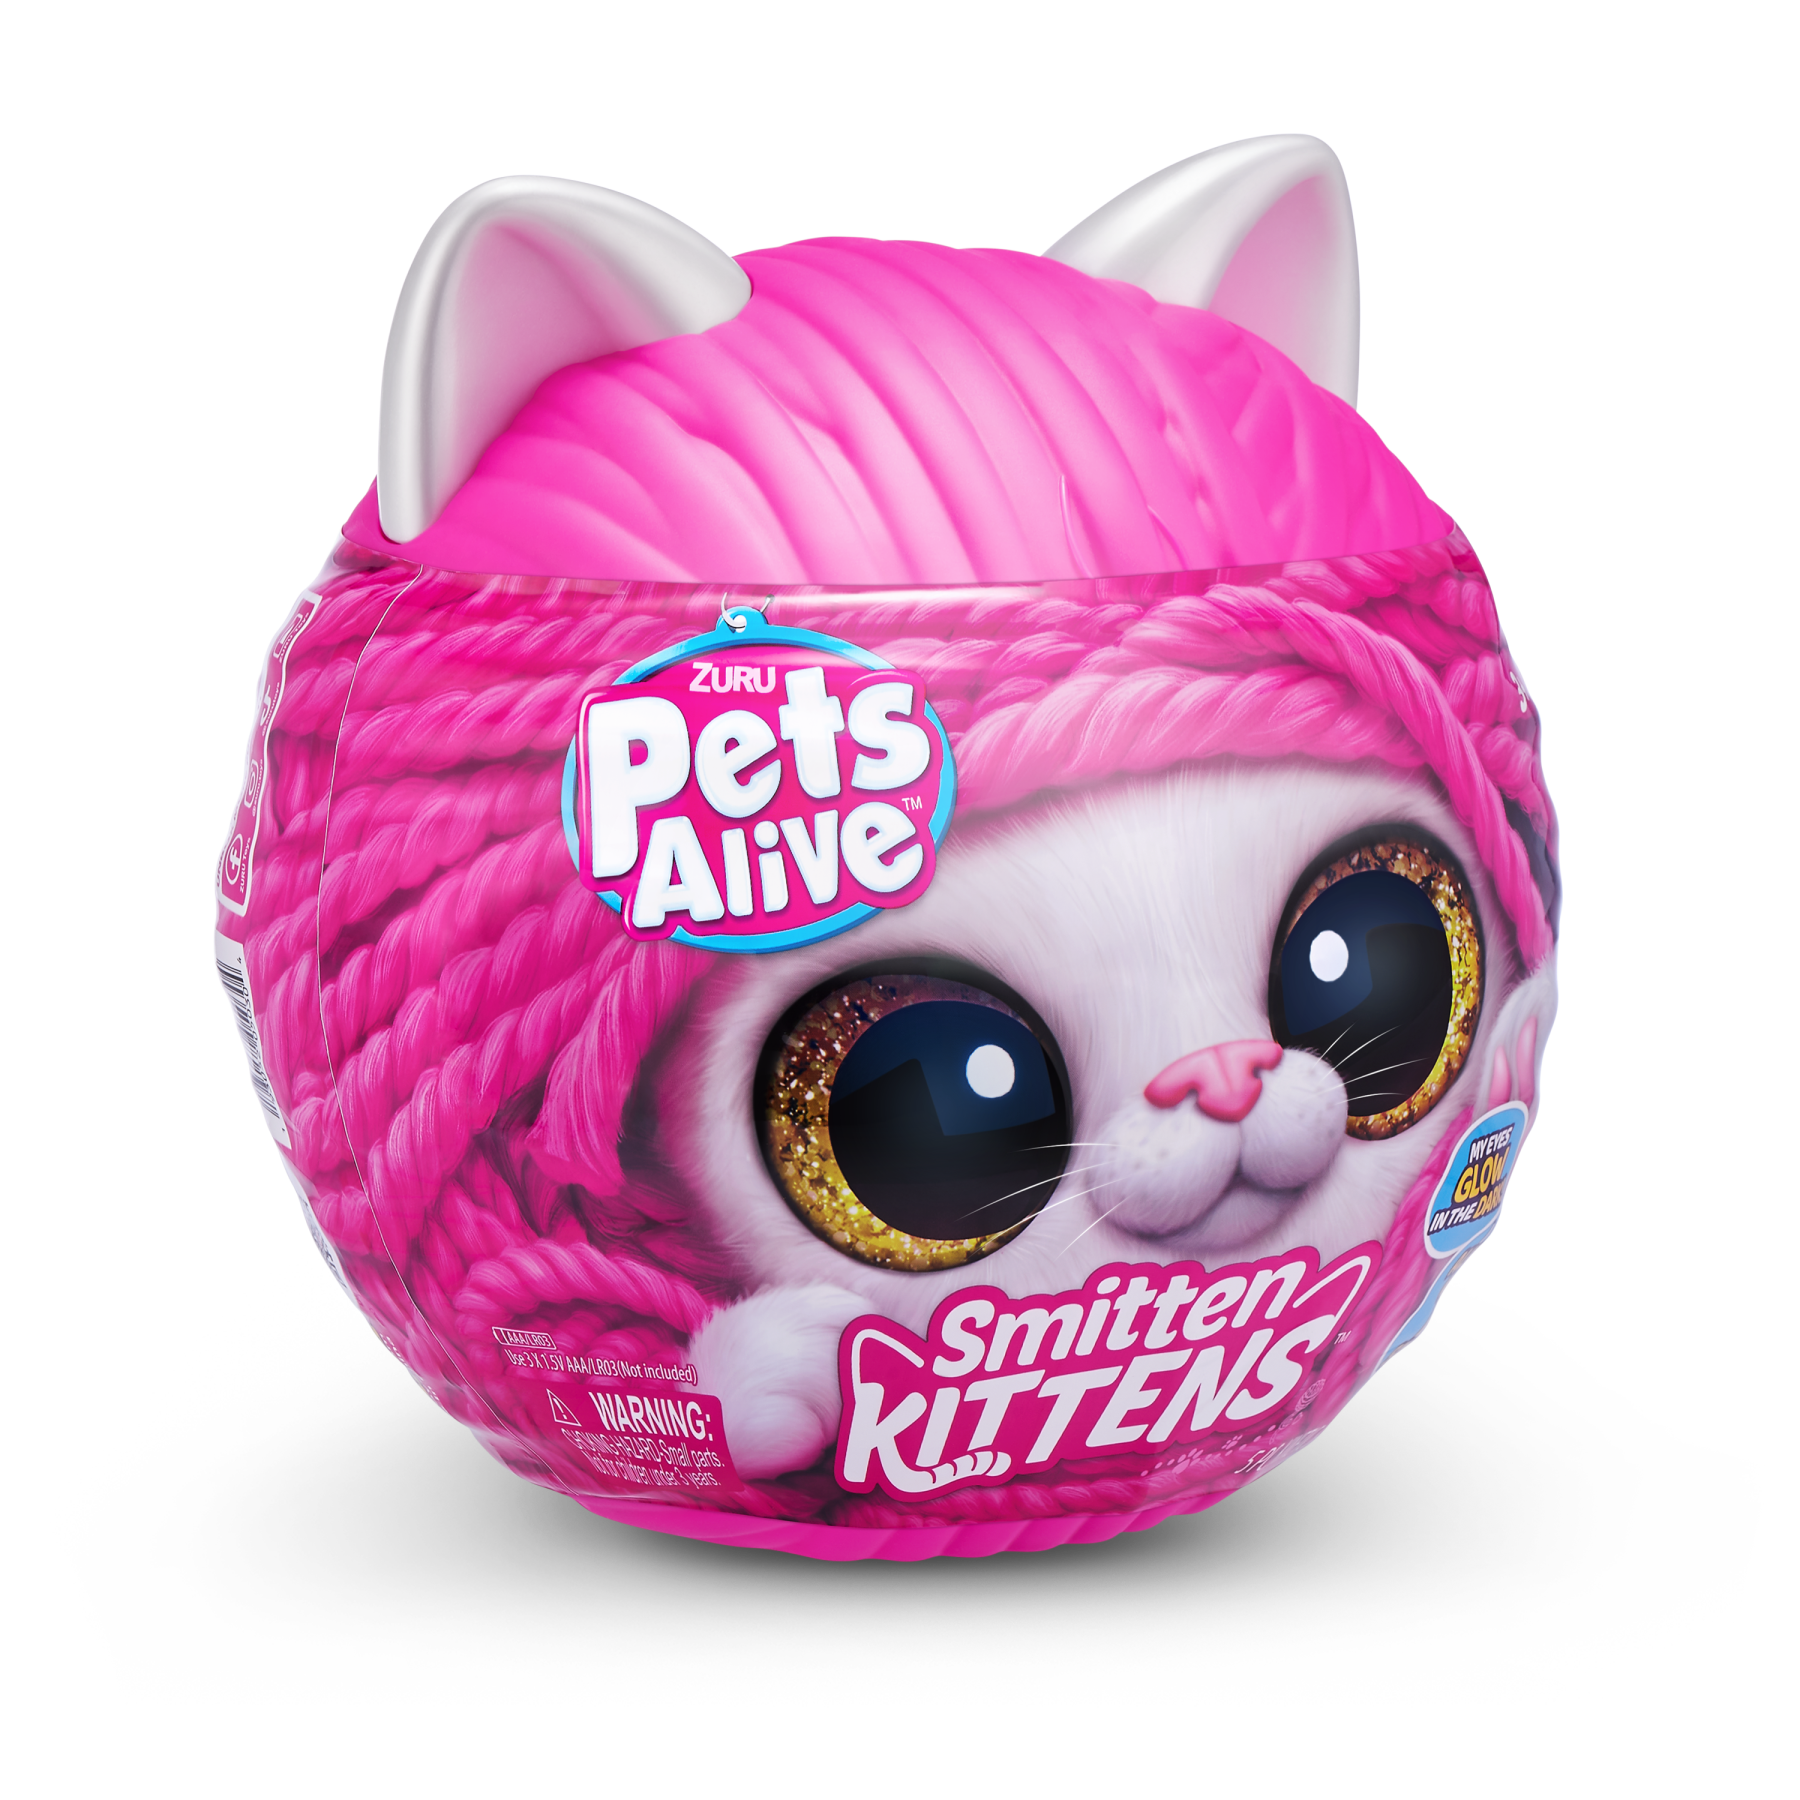 Pets alive smitten kit plush inter - 